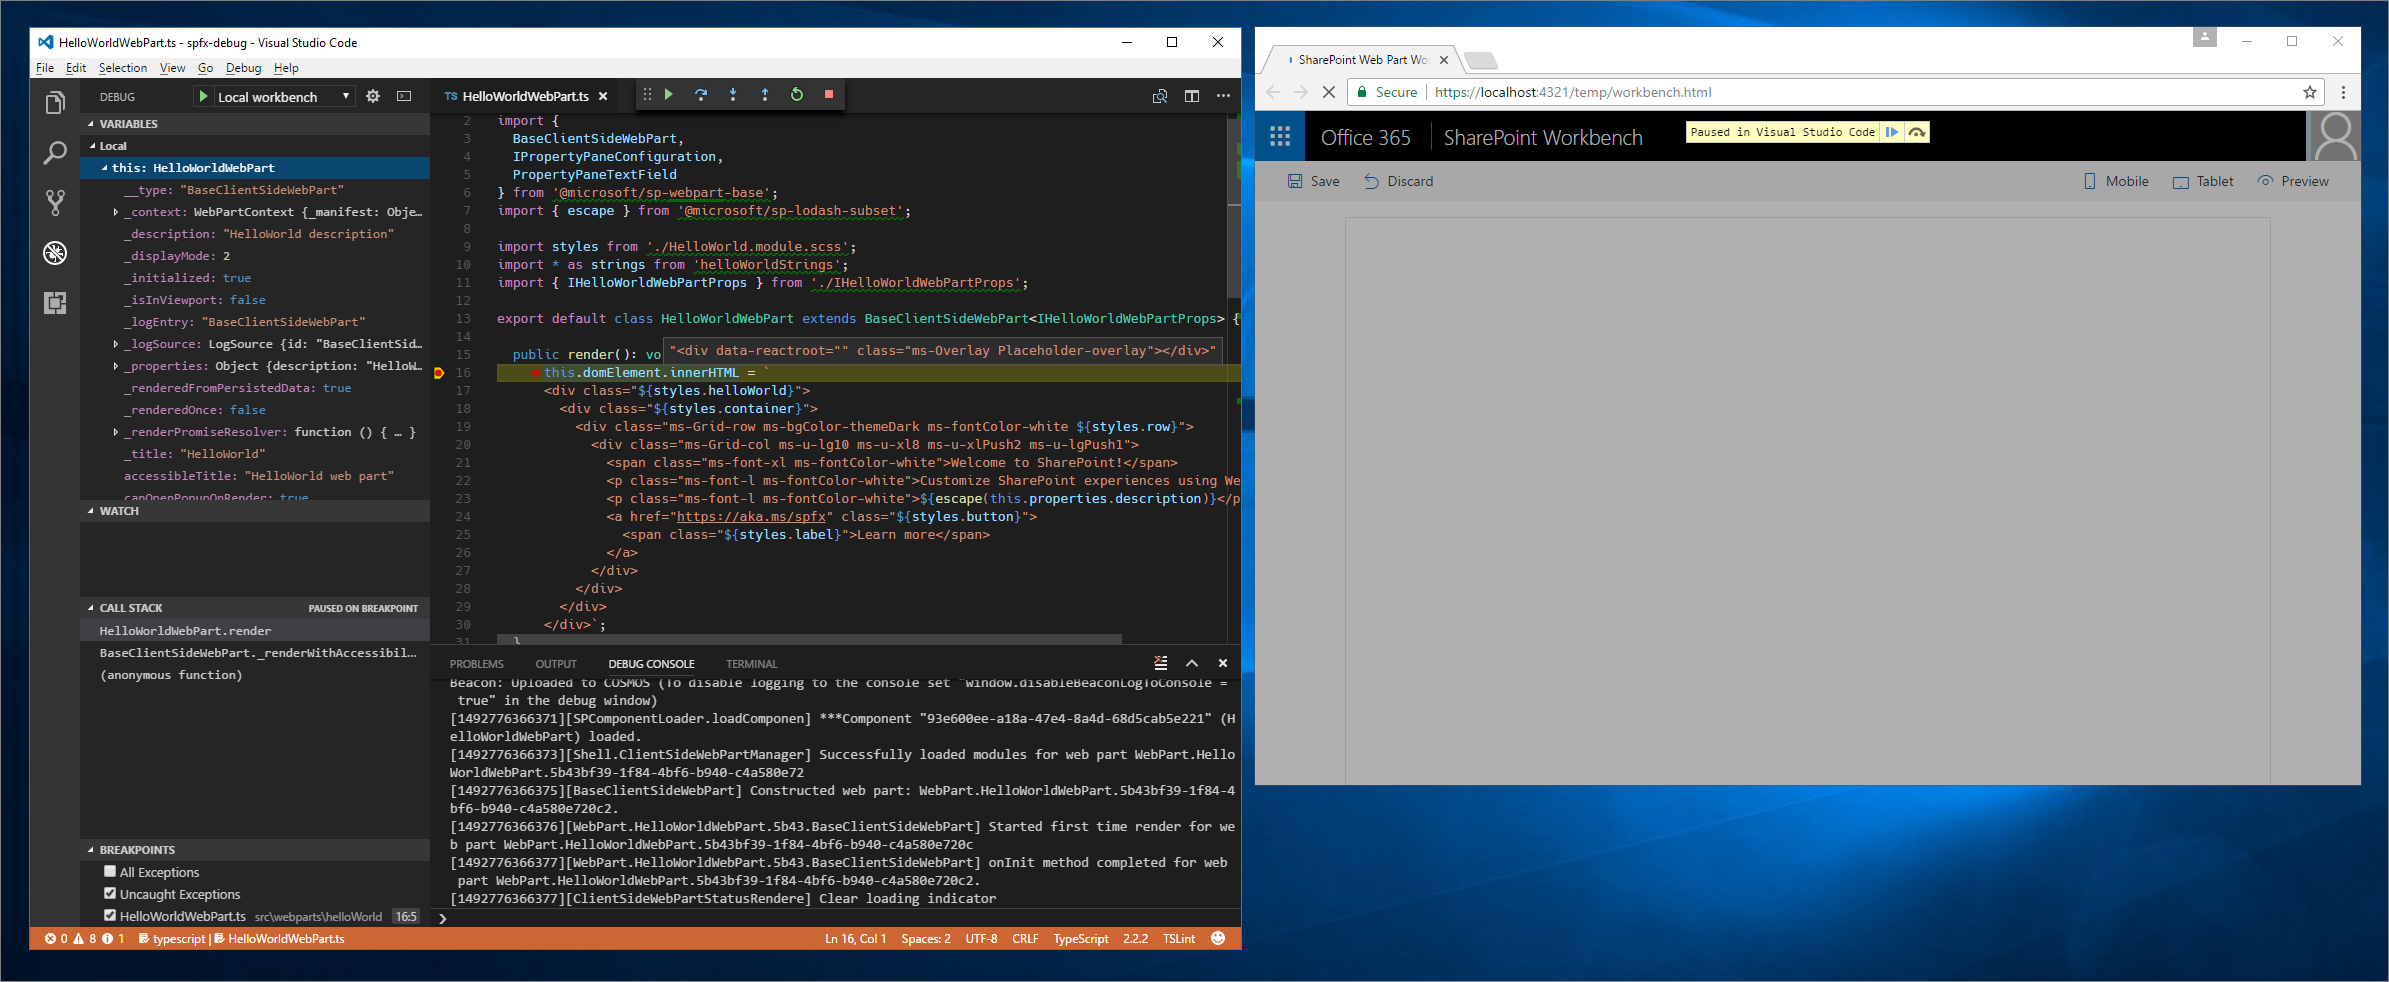 Breakpoint hit in Visual Studio Code